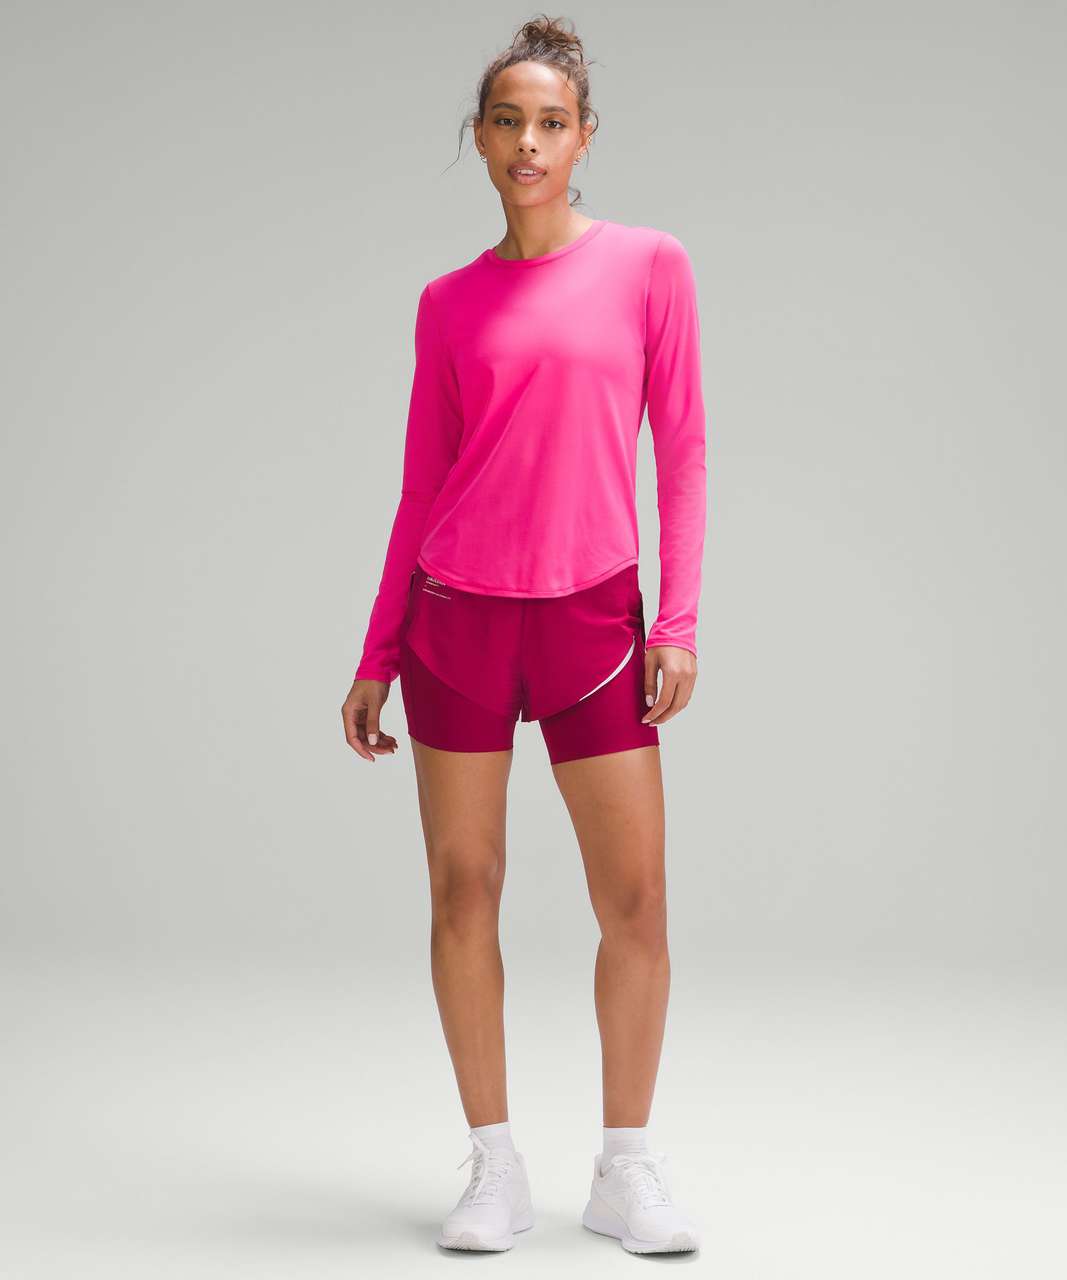 Lululemon High-Neck Running and Training Long-Sleeve Shirt - Sonic Pink